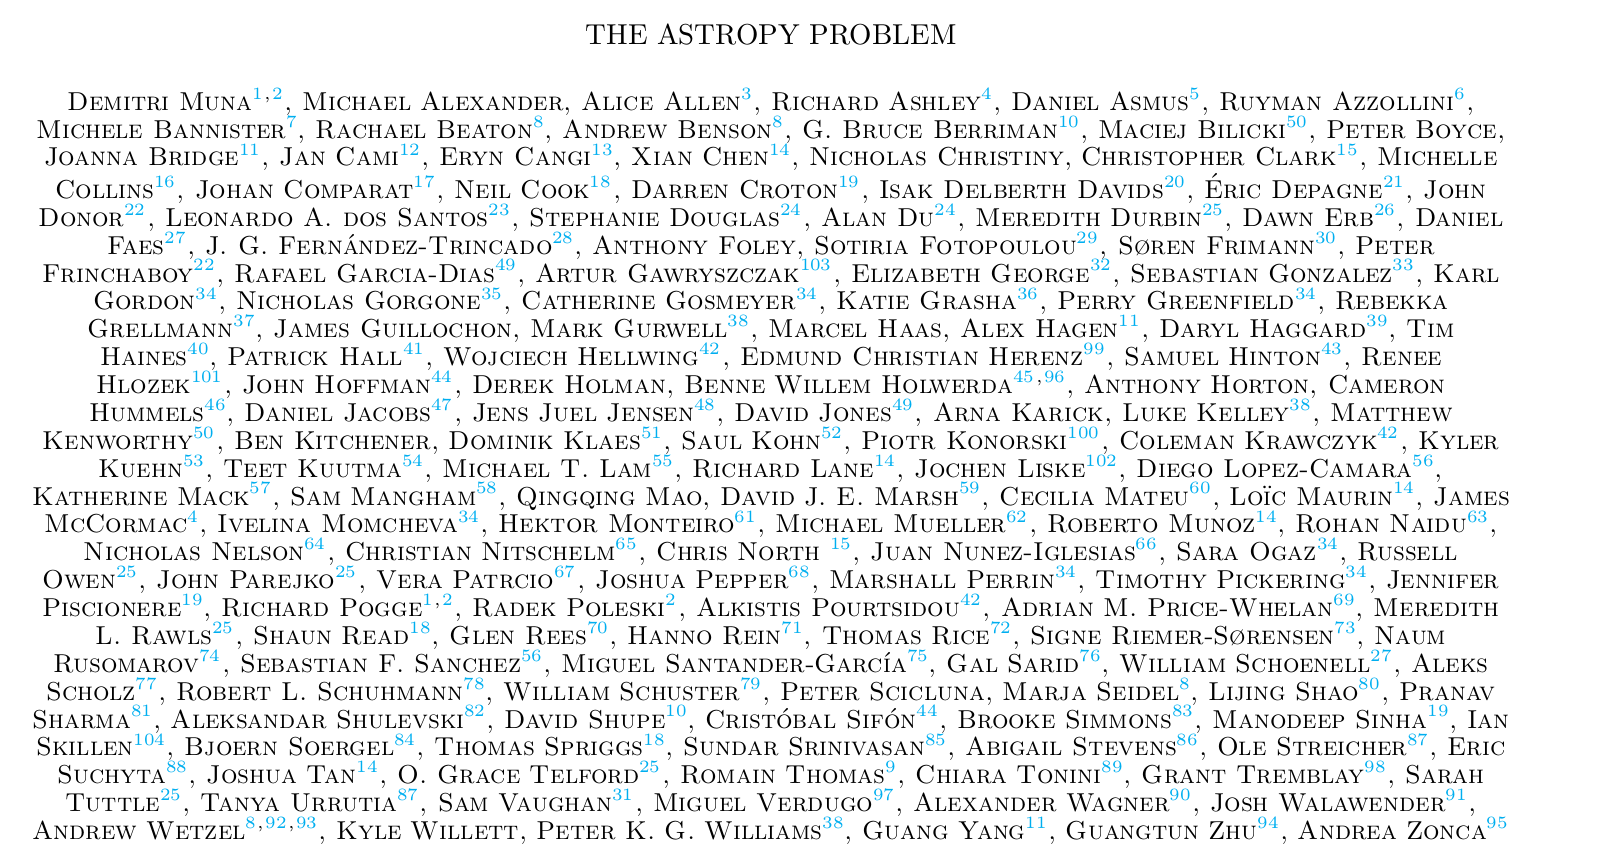 The Astropy Problem image